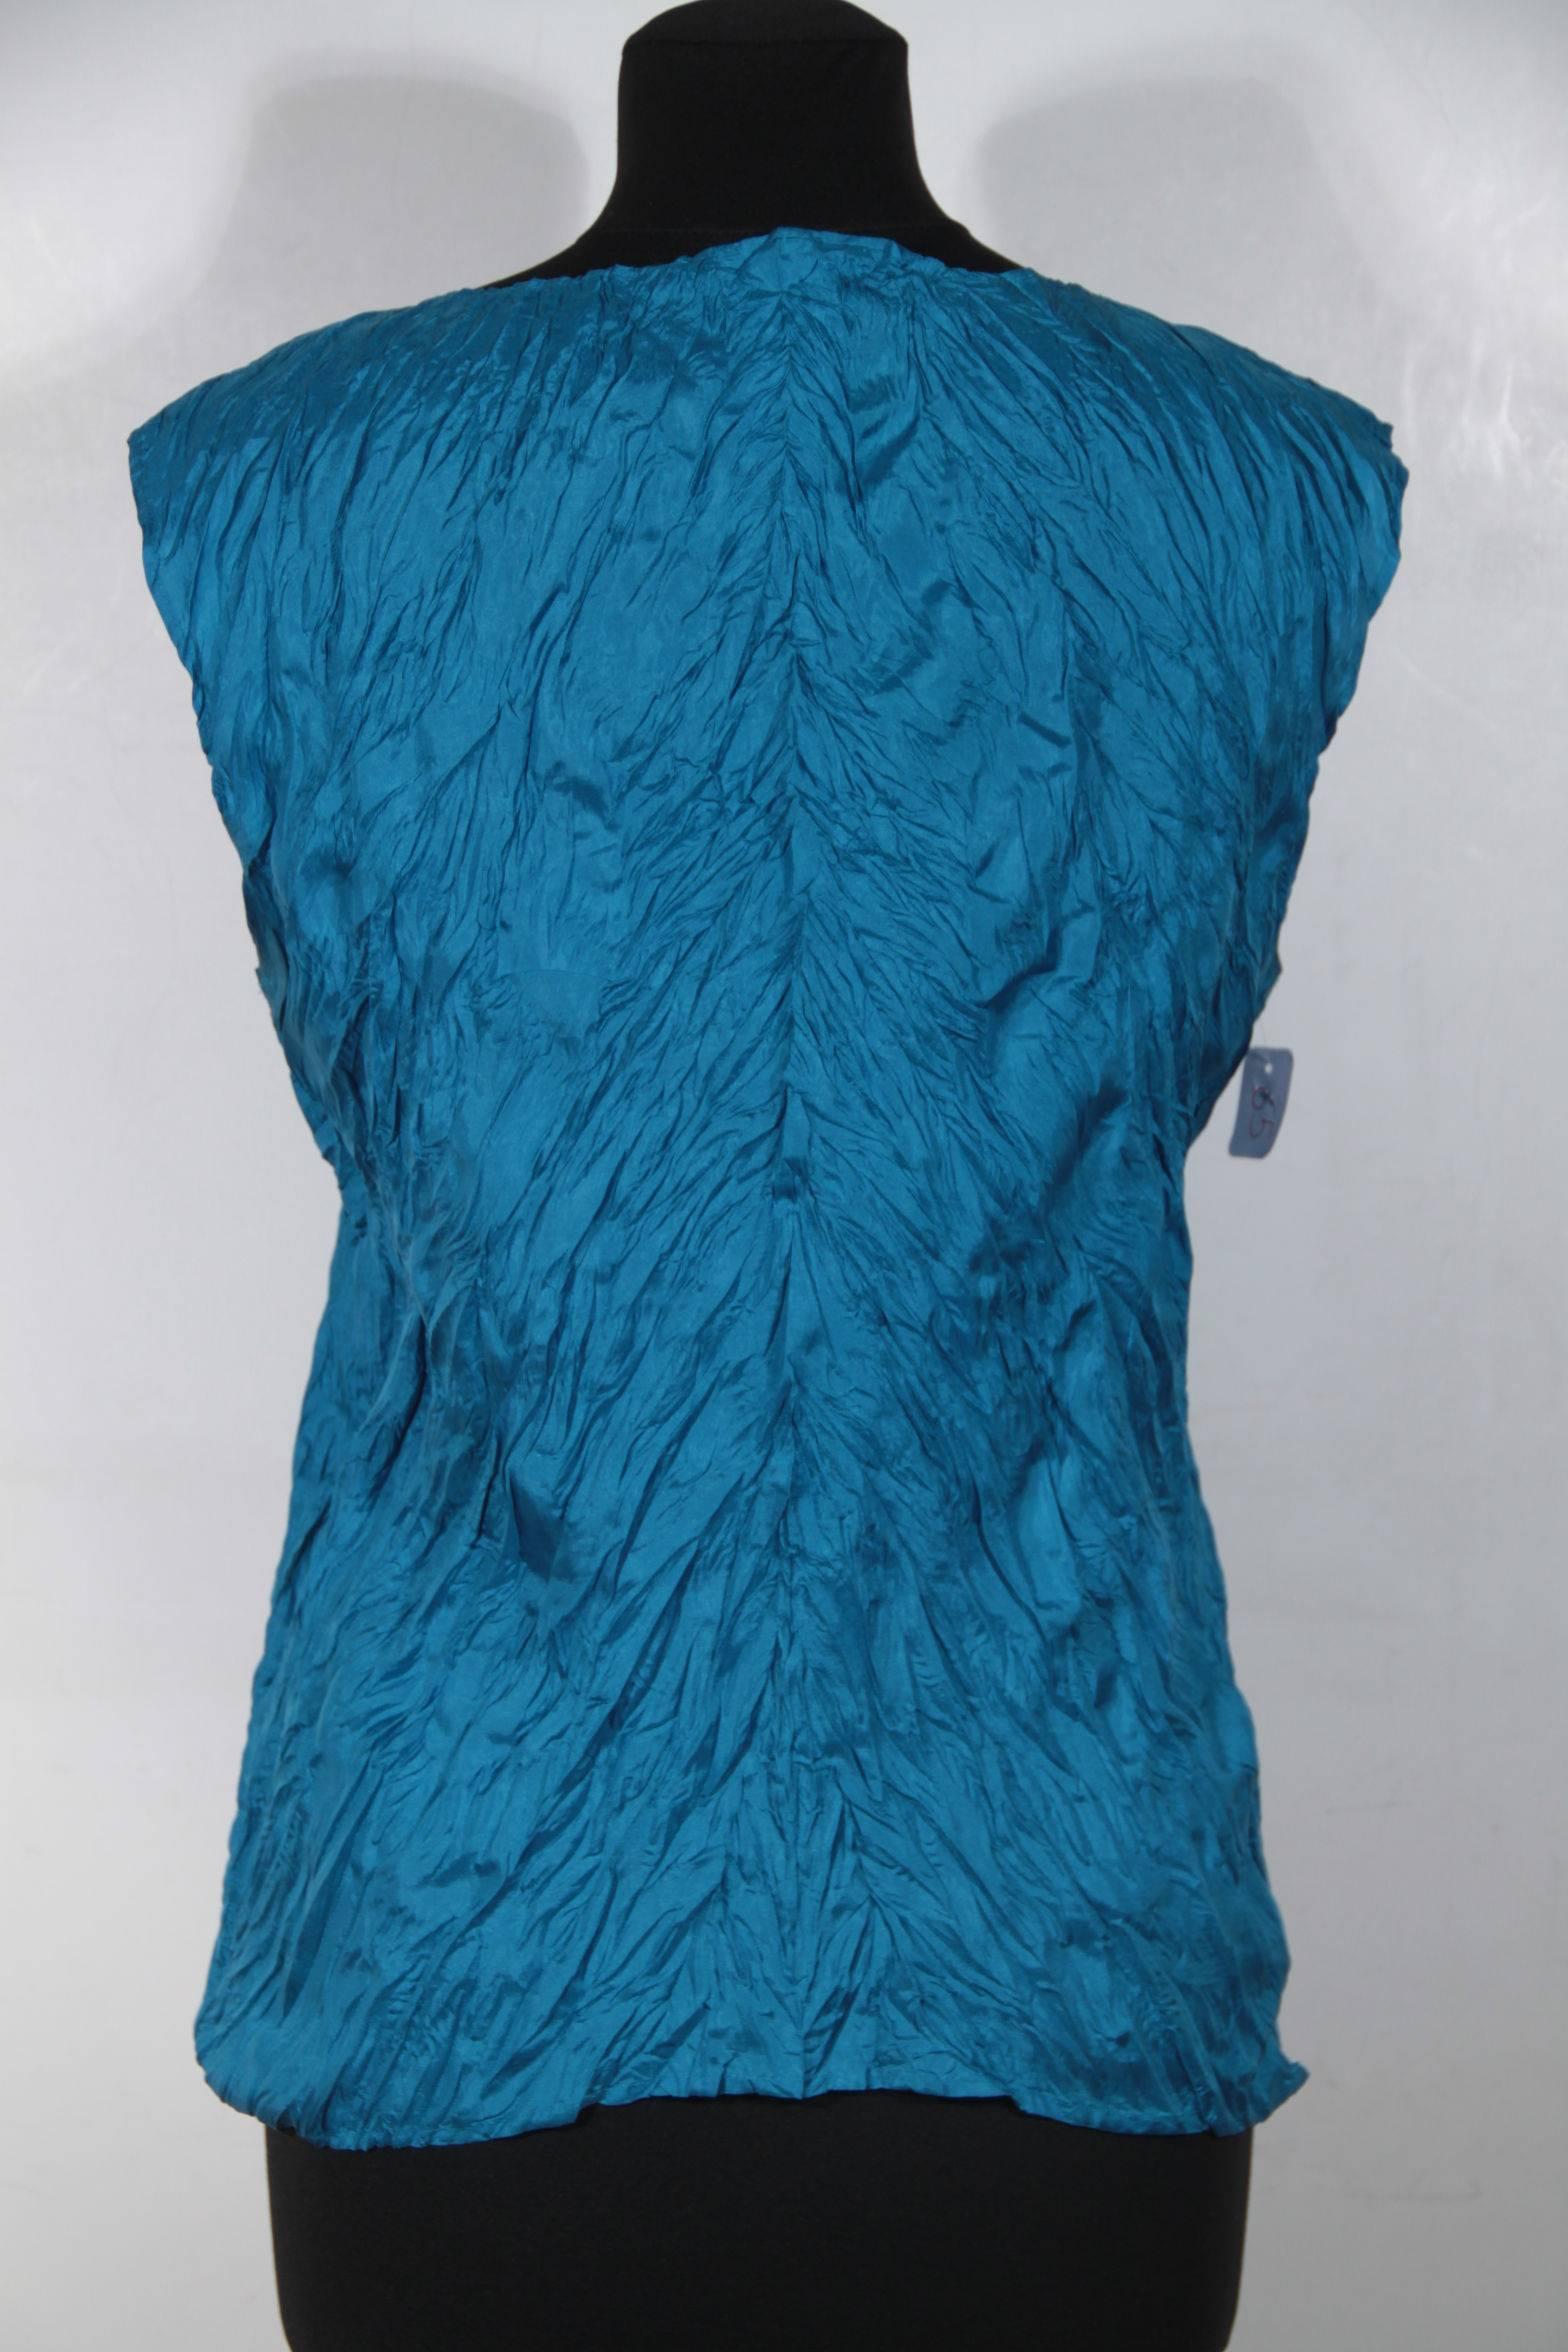 Blue ISSEY MIYAKE Turquoise CRINKLE Poly Fabric SLEEVELESS TOP Vest SIZE M